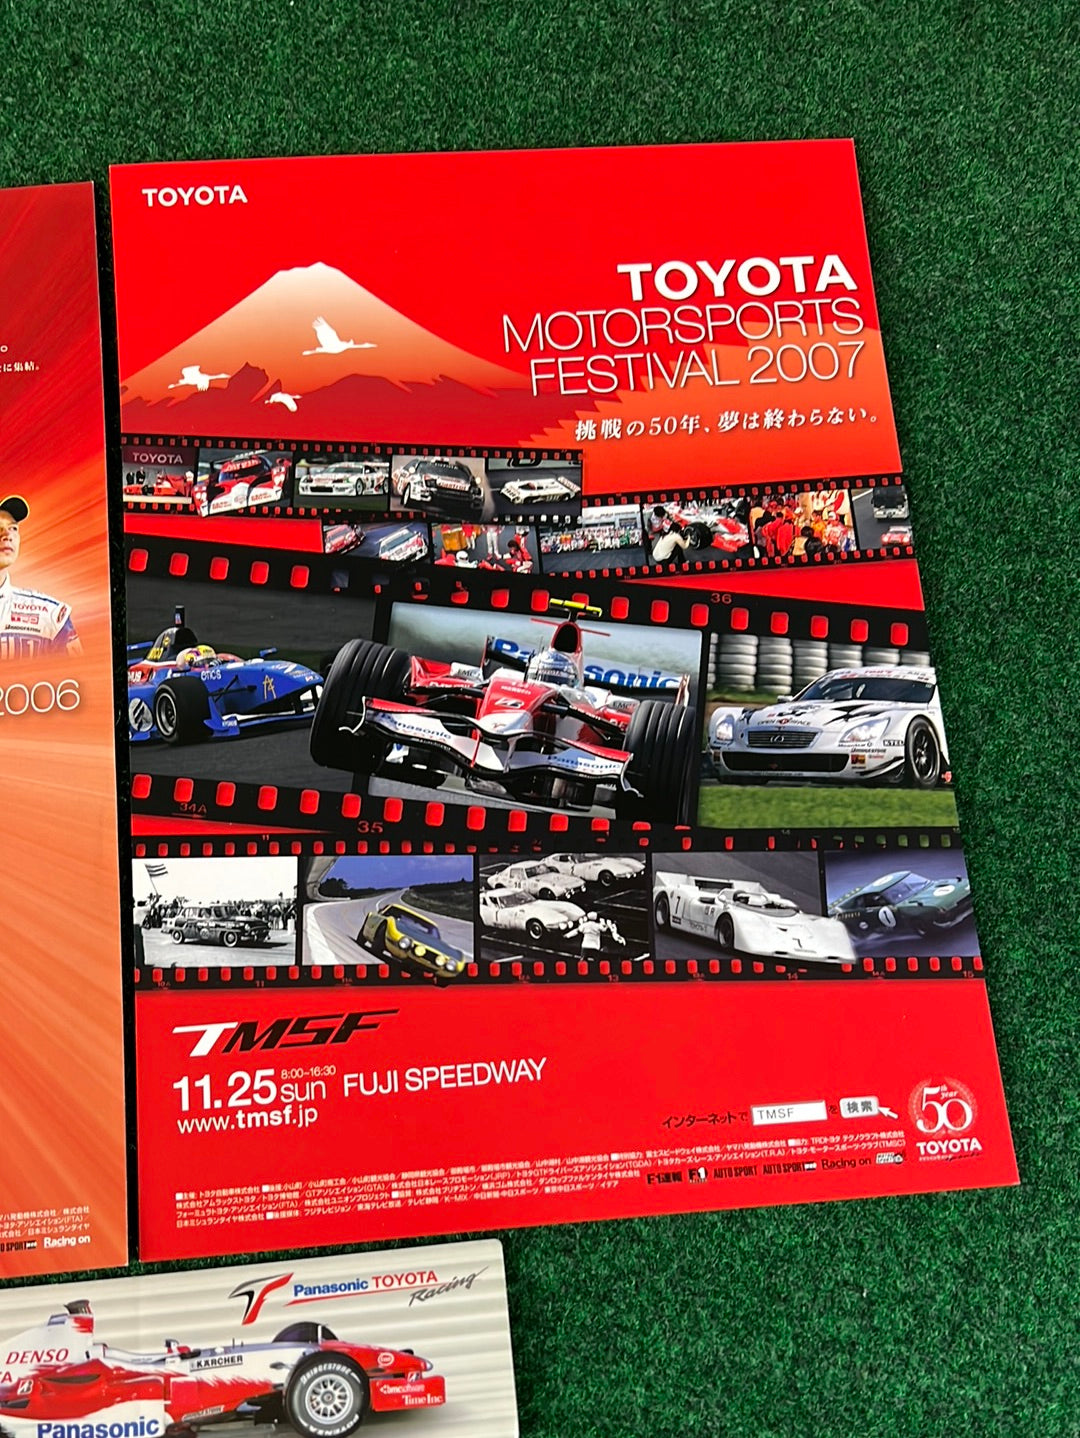 Toyota Motorsports Festival 2006 & 2007 Flyers